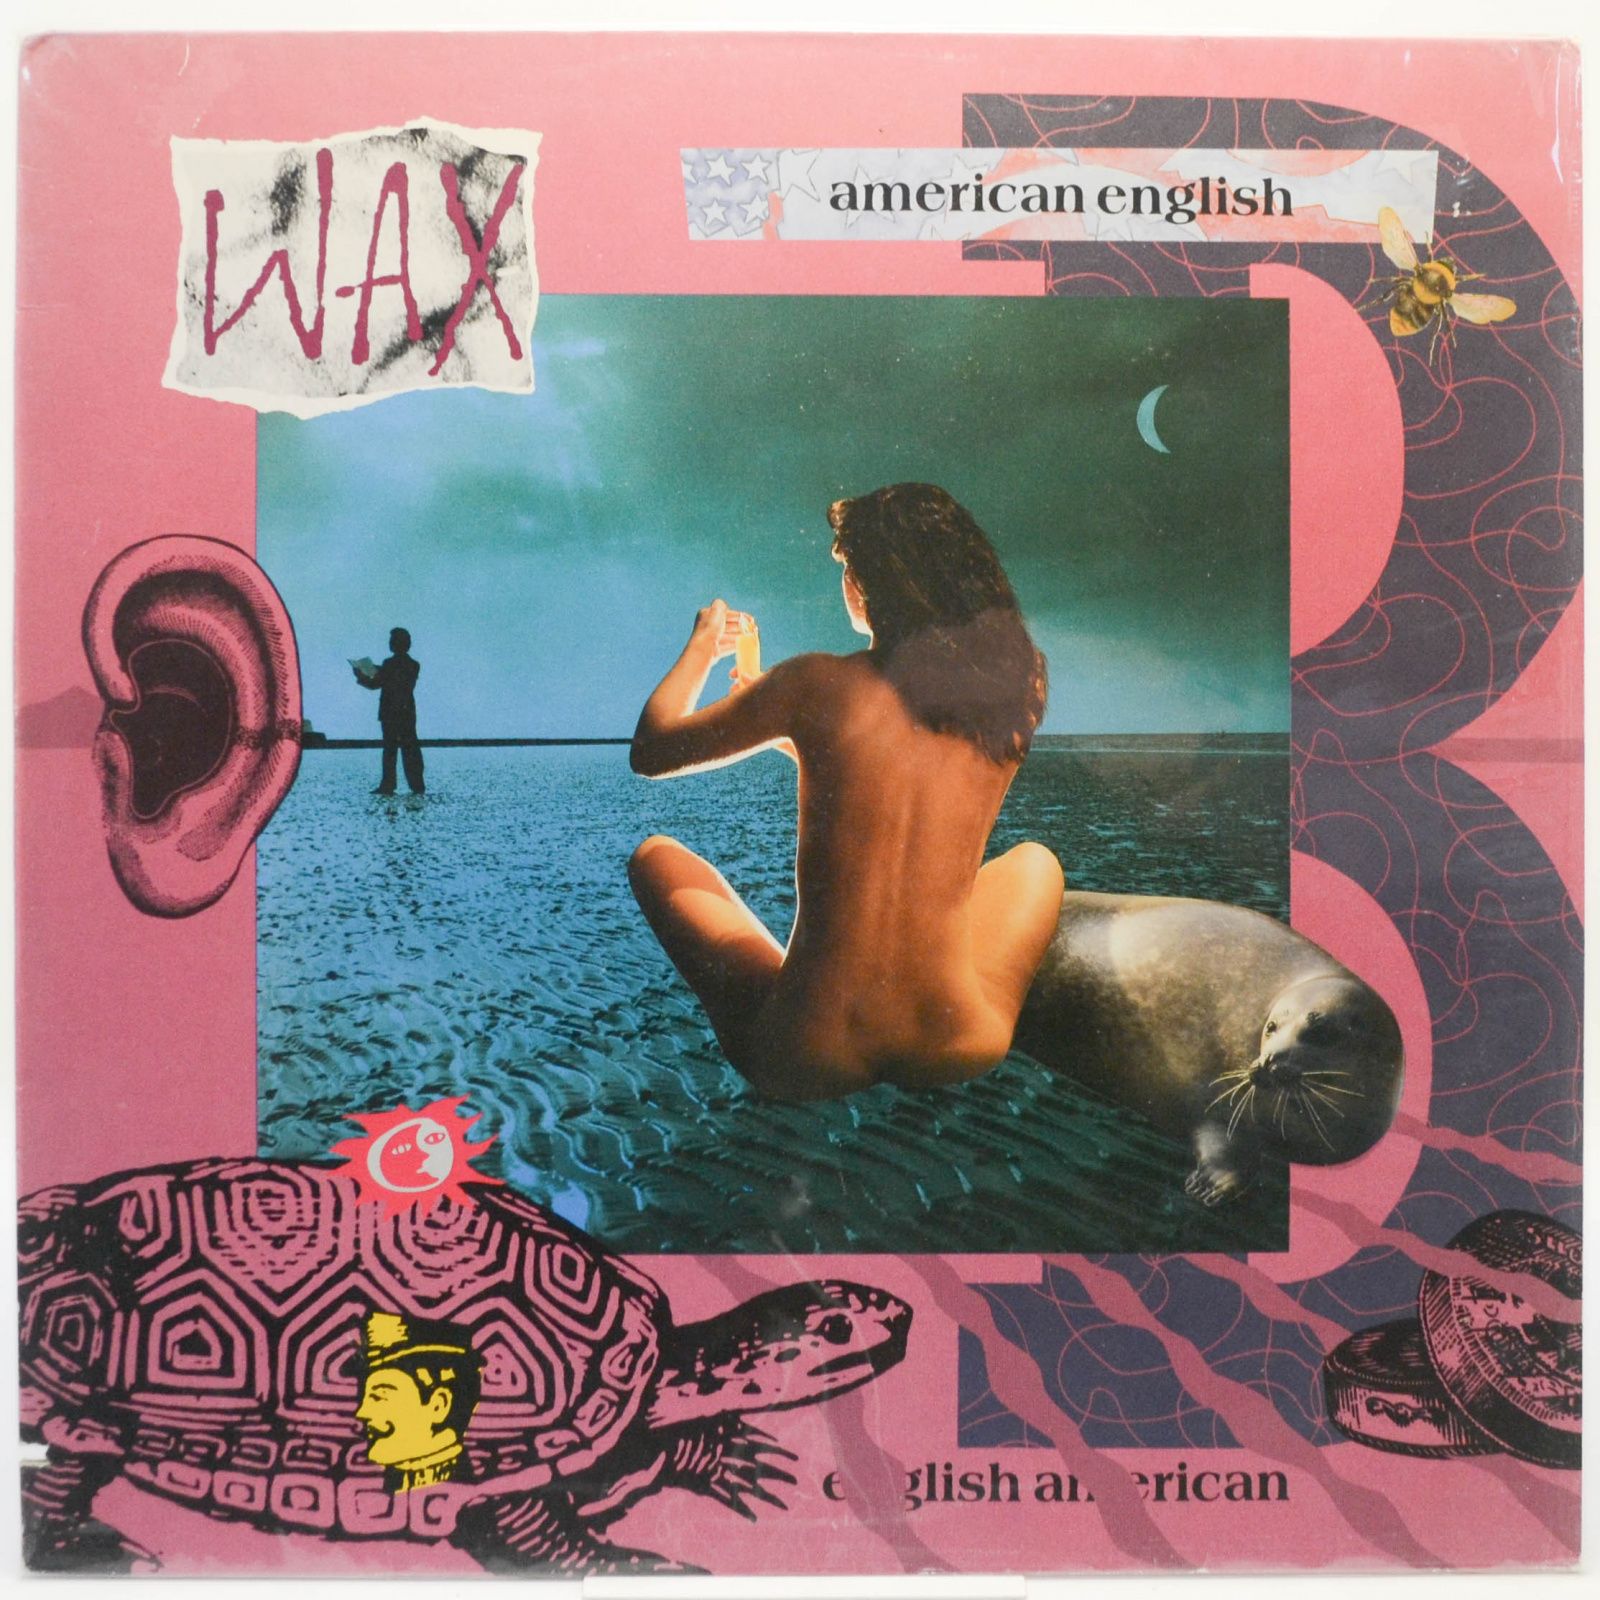 Wax — American English, 1987